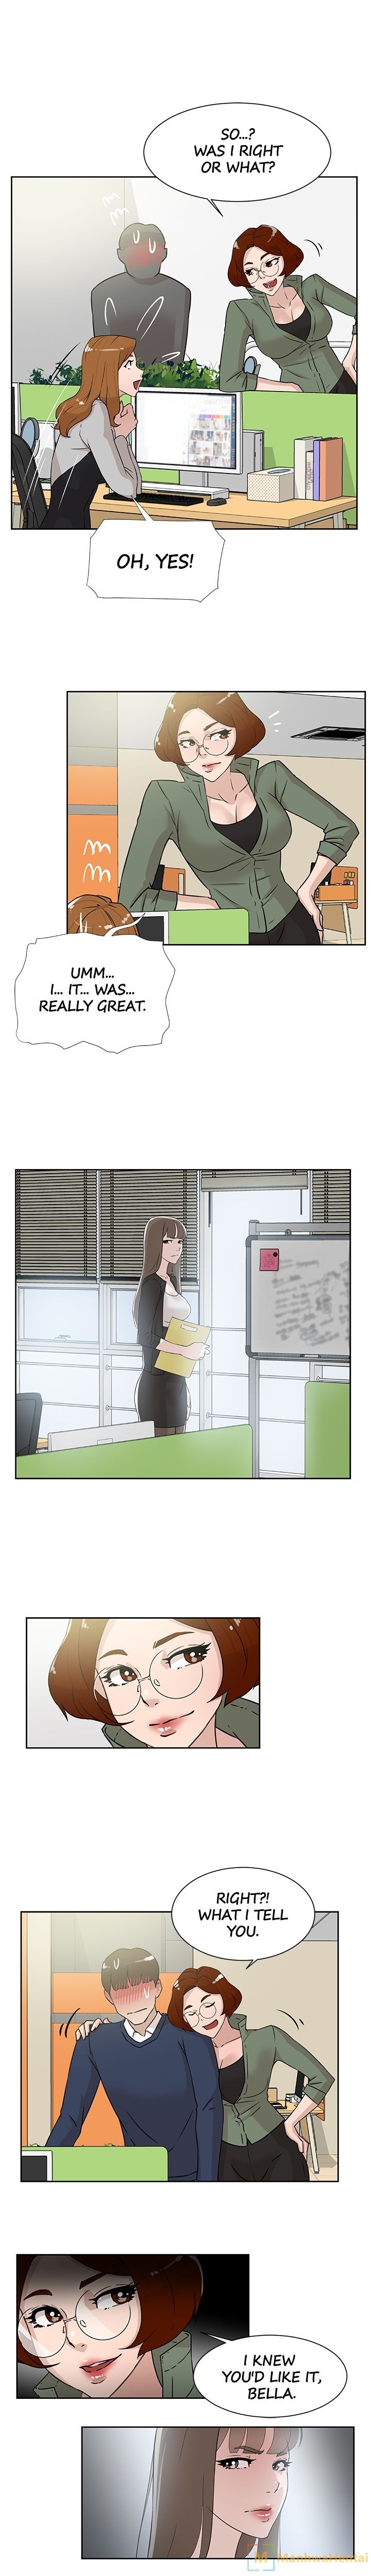 Office Affairs image